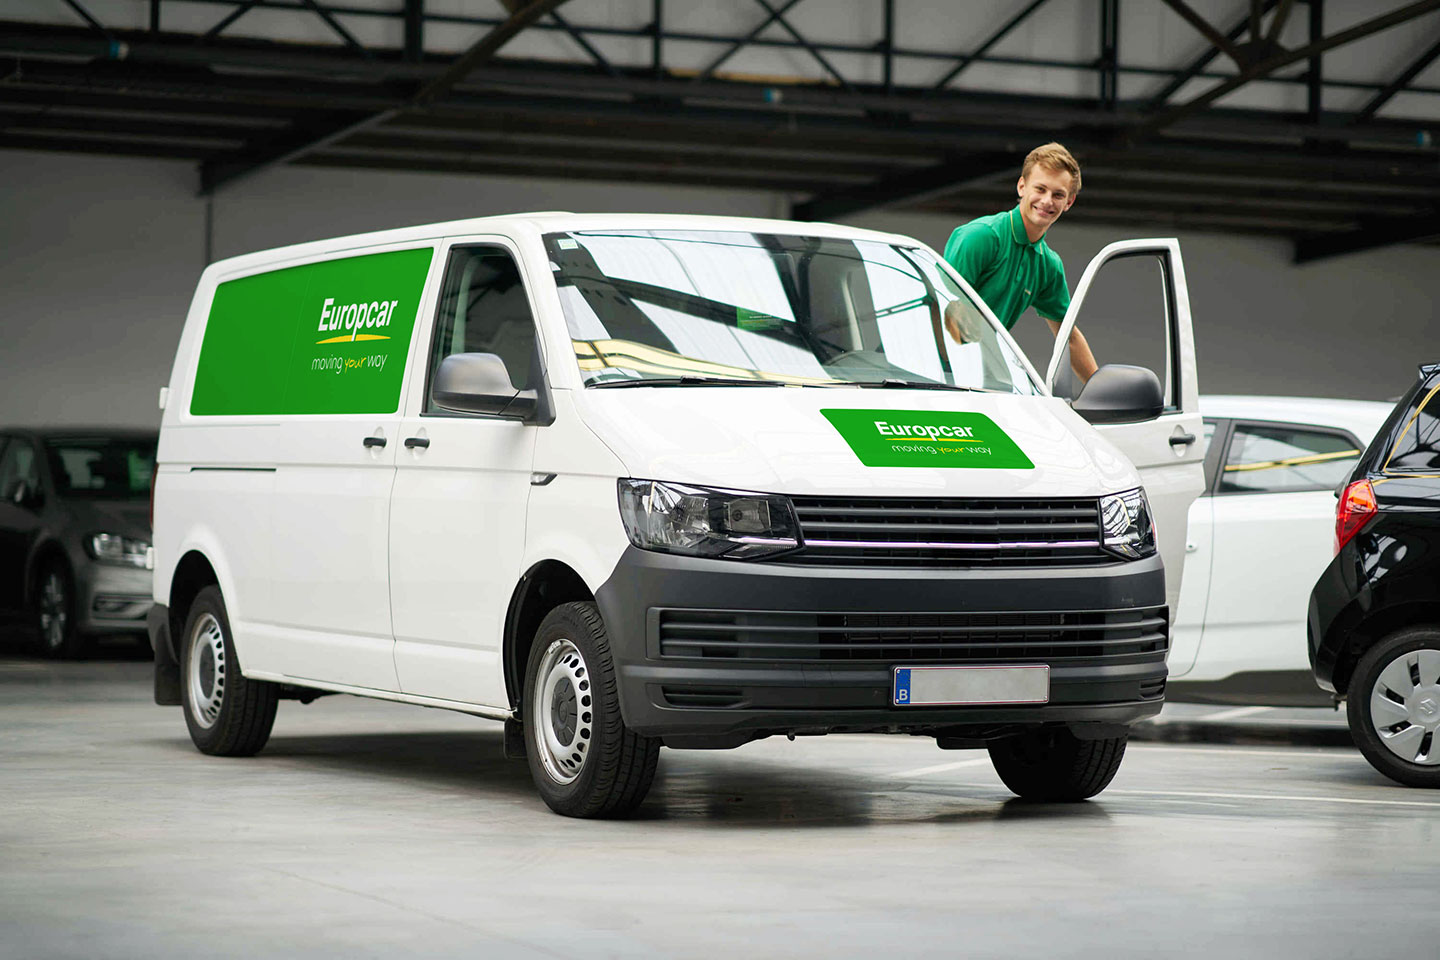 Europcar Van and Truck Hire | Europcar